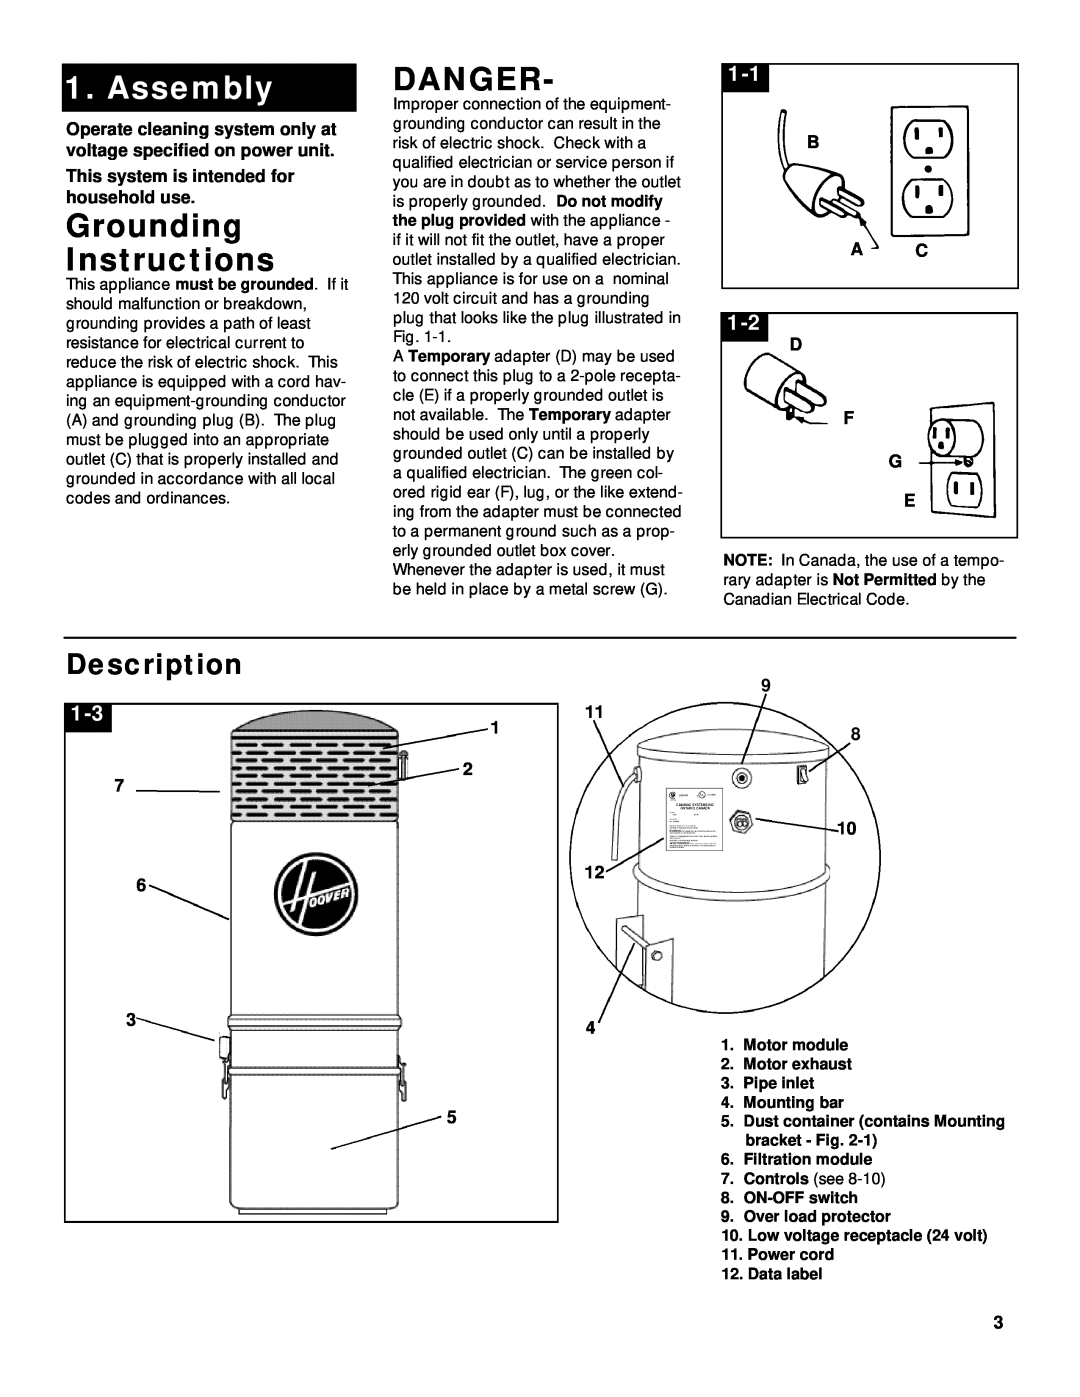 Hoover S5640 owner manual Assembly, Grounding Instructions, Danger, Description 